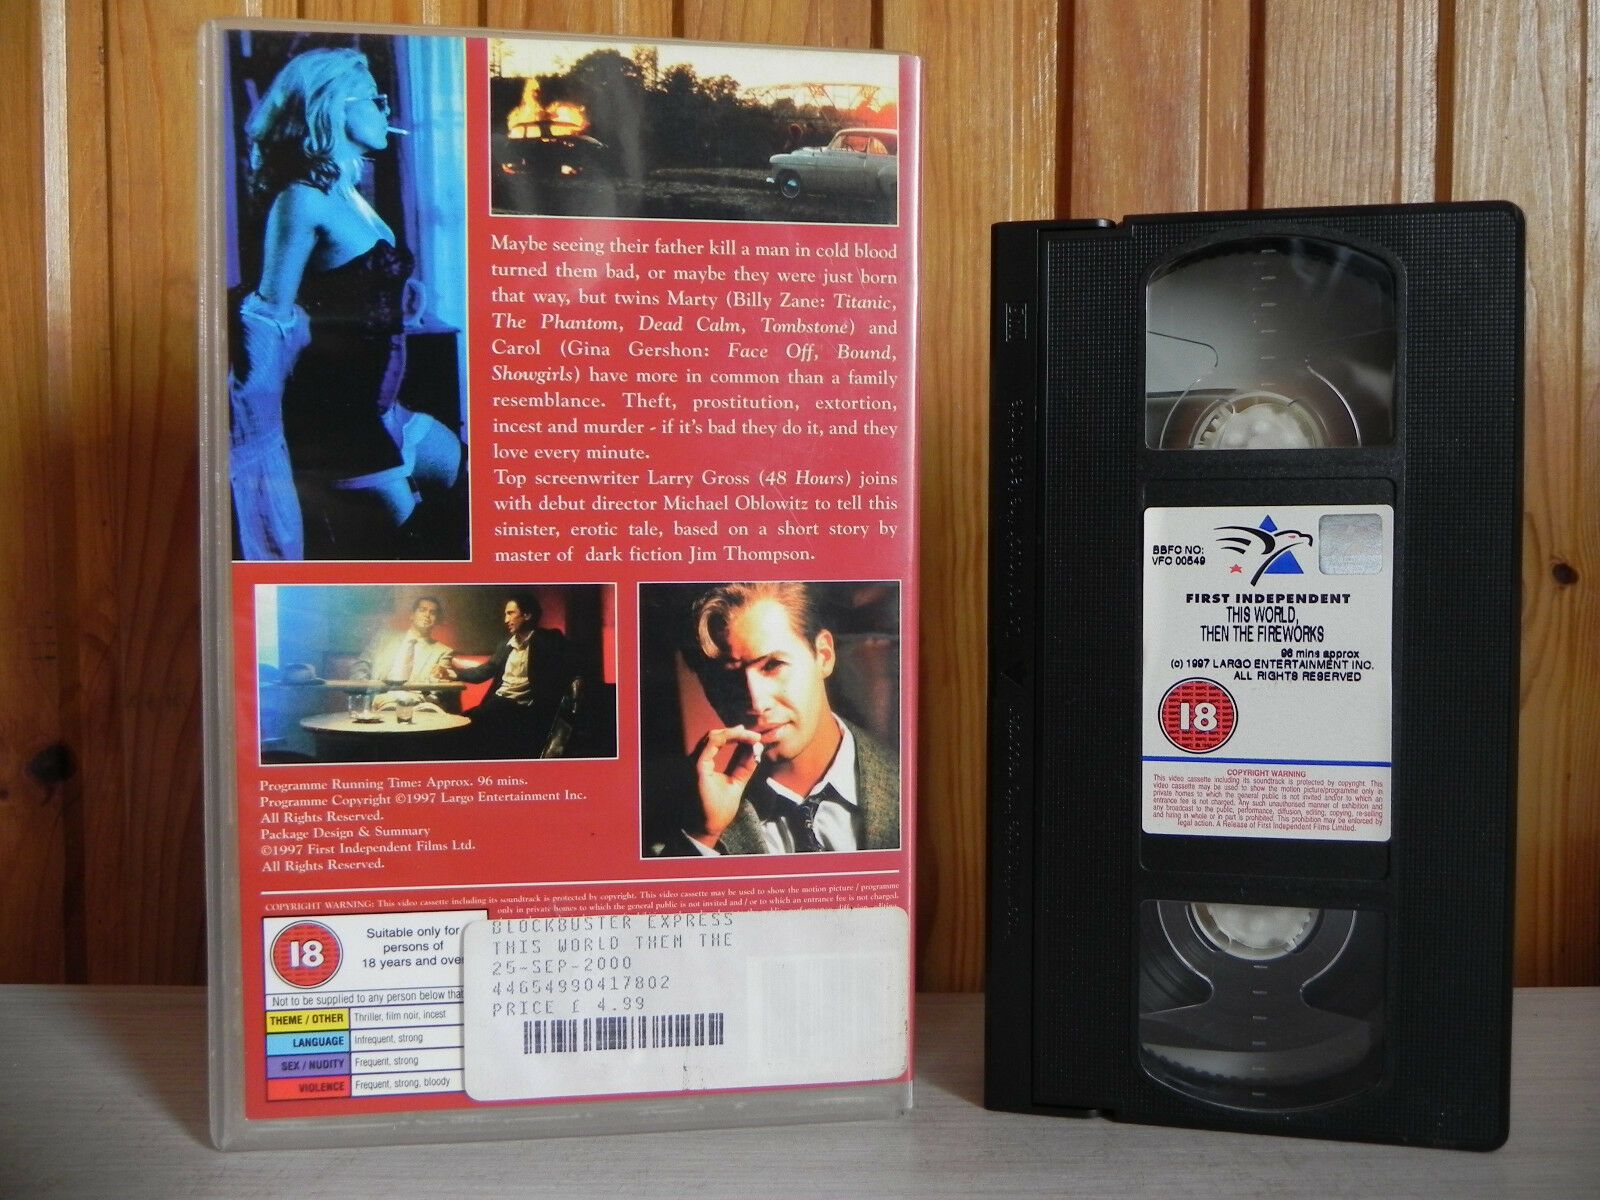 The World, Then The Fireworks - Thriller - Cert (18) - Billy Zane - Pal VHS-